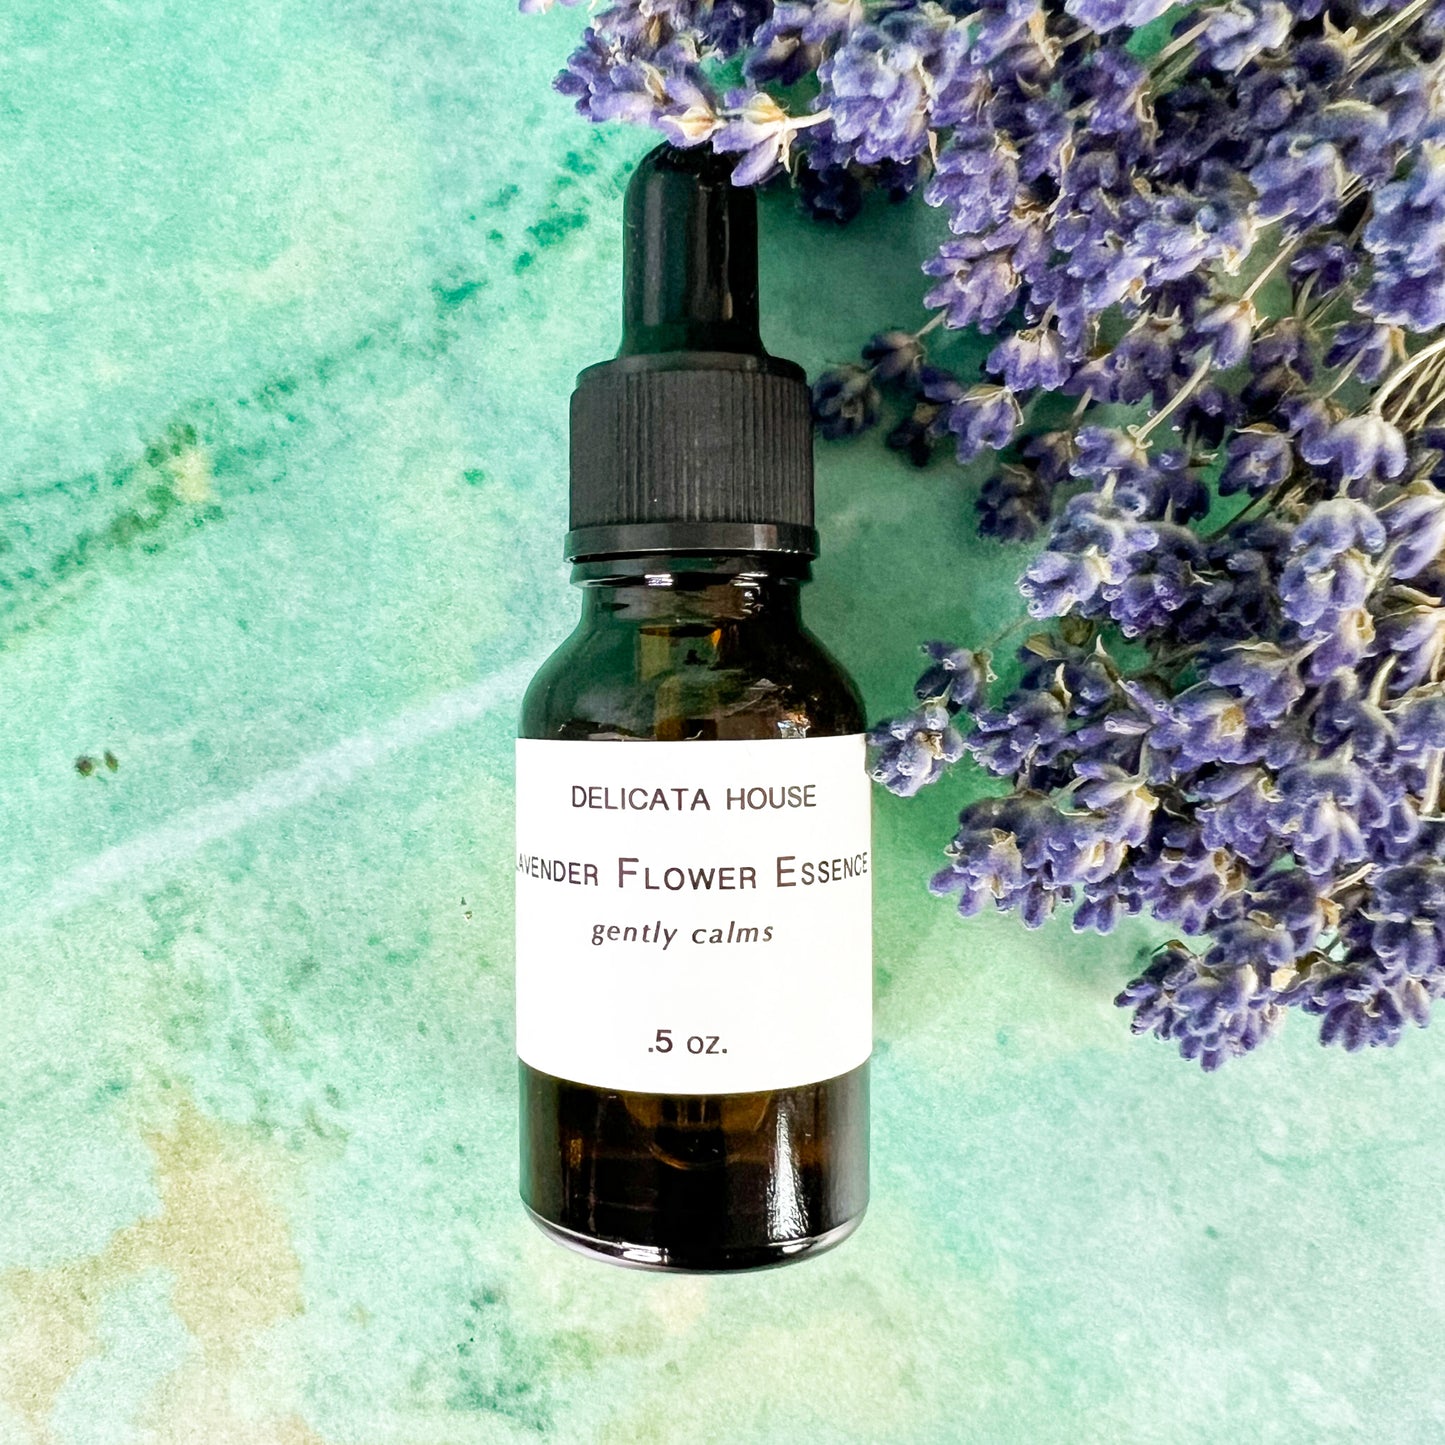 Flower Essence - Lavender Flower Essence - Lavender Flower Remedy - Third Eye Chakra Support - Crown Chakra Support - Calming Flower Support